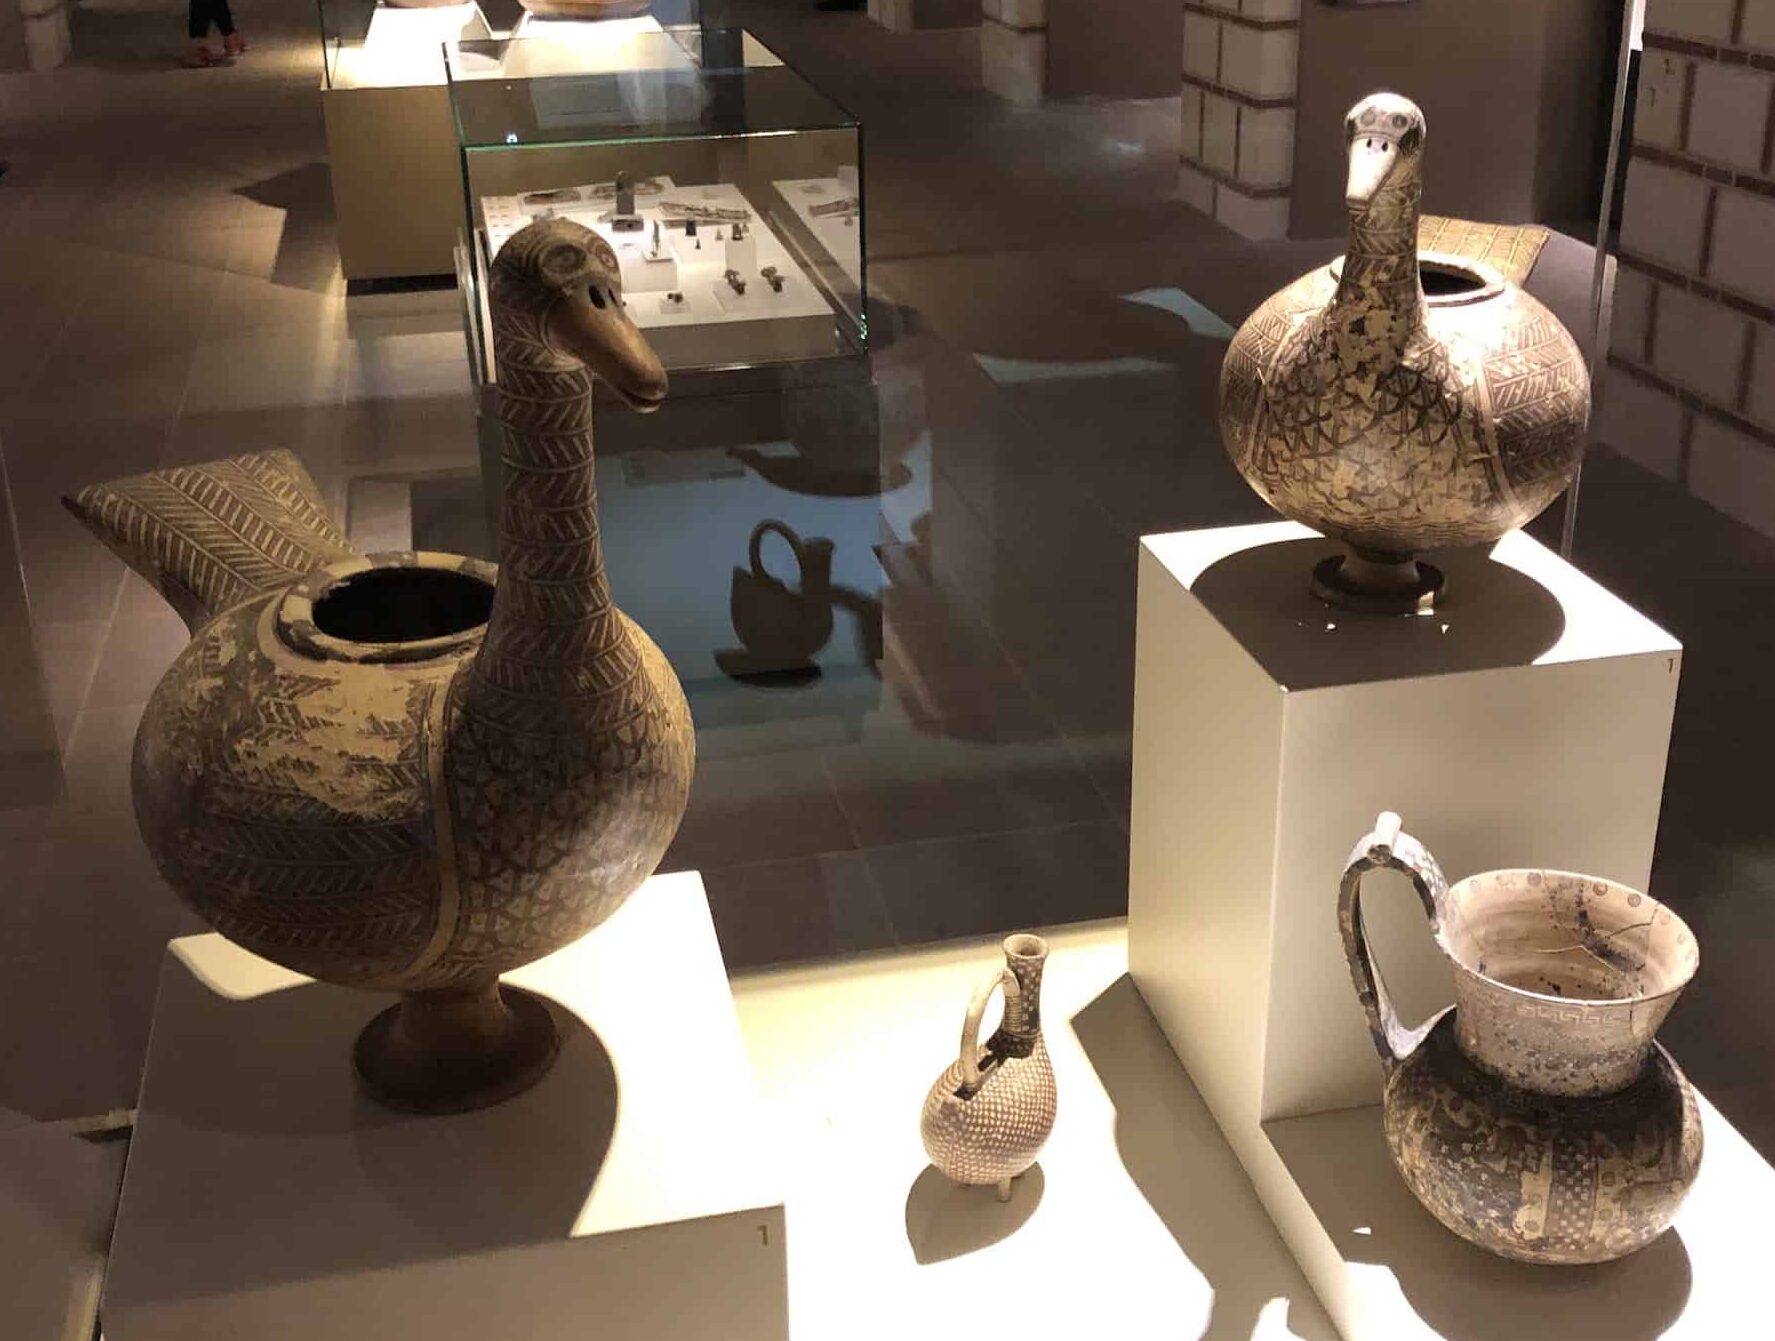 Ceramic vessels shaped like ducks